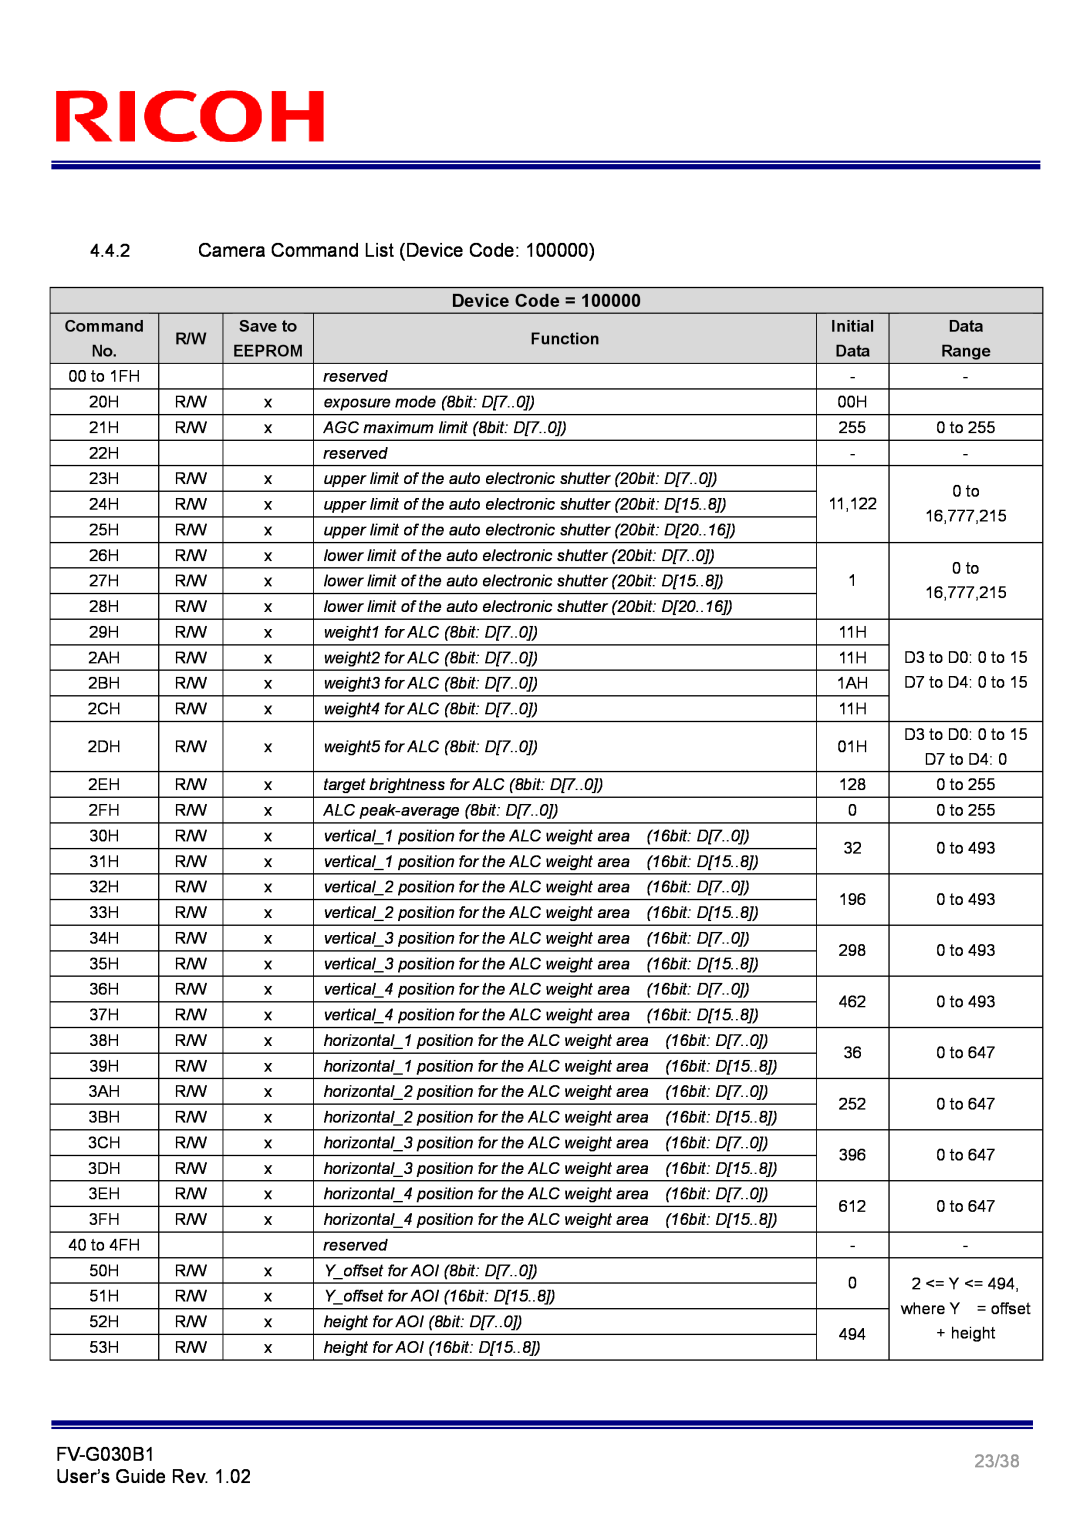 Ricoh FV-G030B1 manual 4.4.2Camera Command List Device Code, User’s Guide Rev, 23/38 